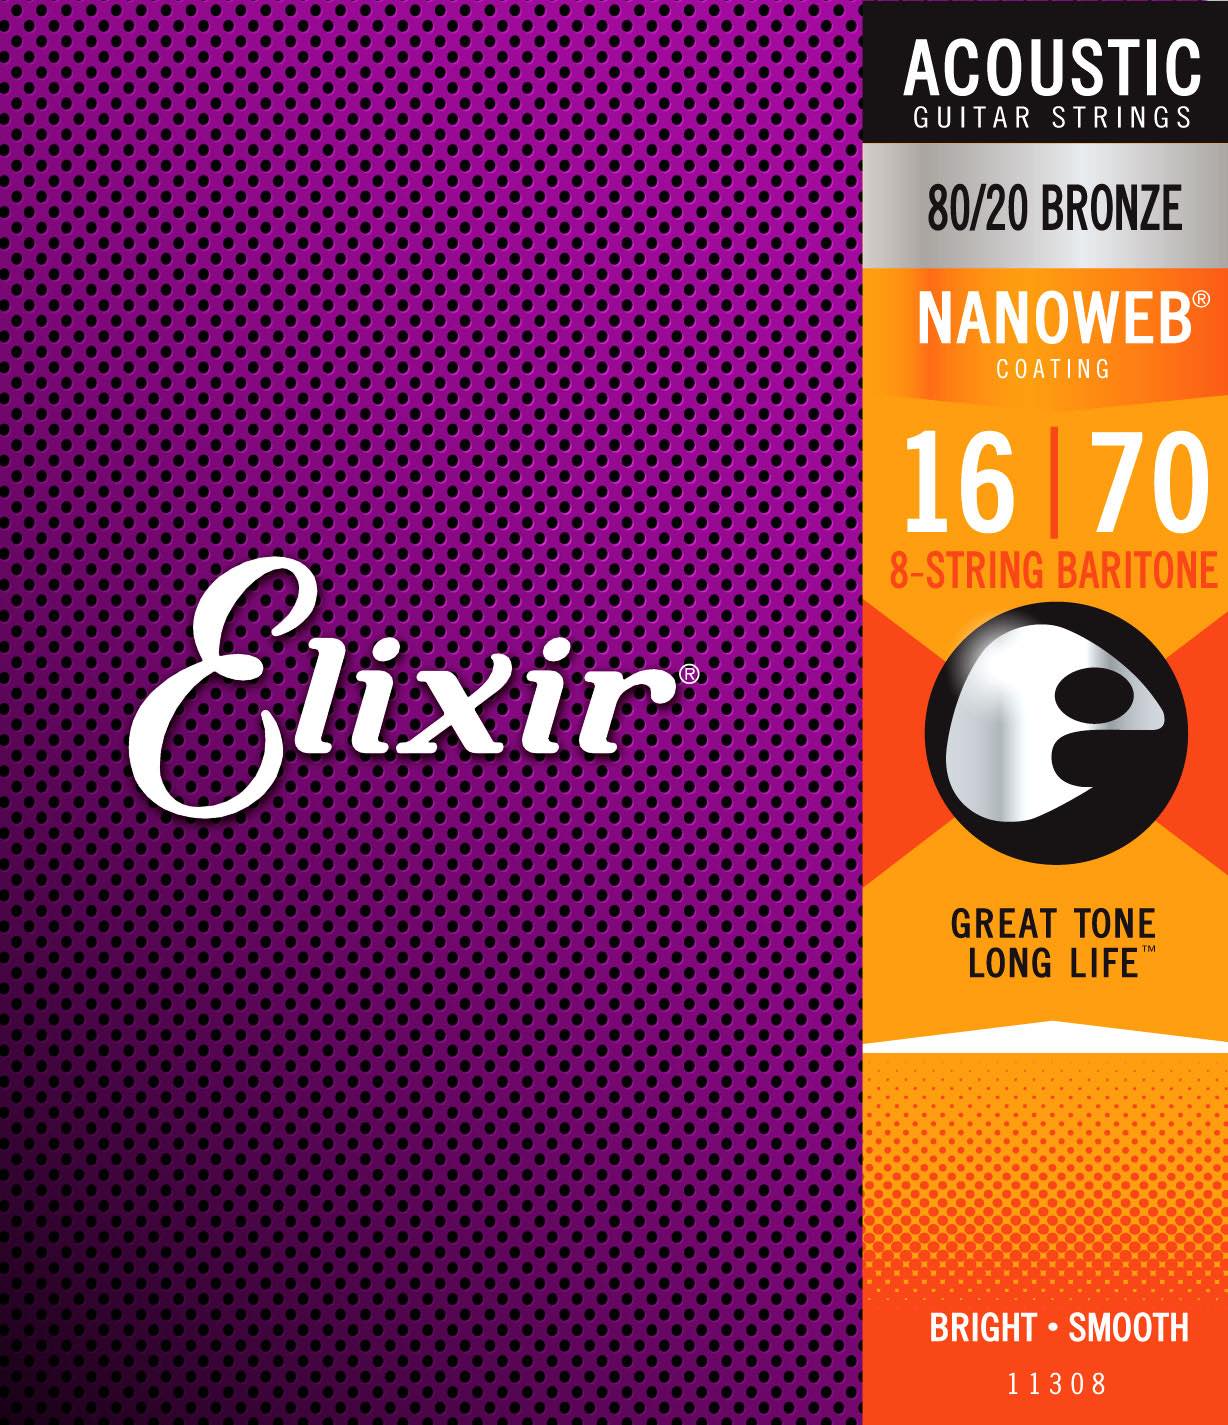 ELIXIR 11308 NANOWEB 80/20 BRONZE 8-STRING BARITONE 16-70